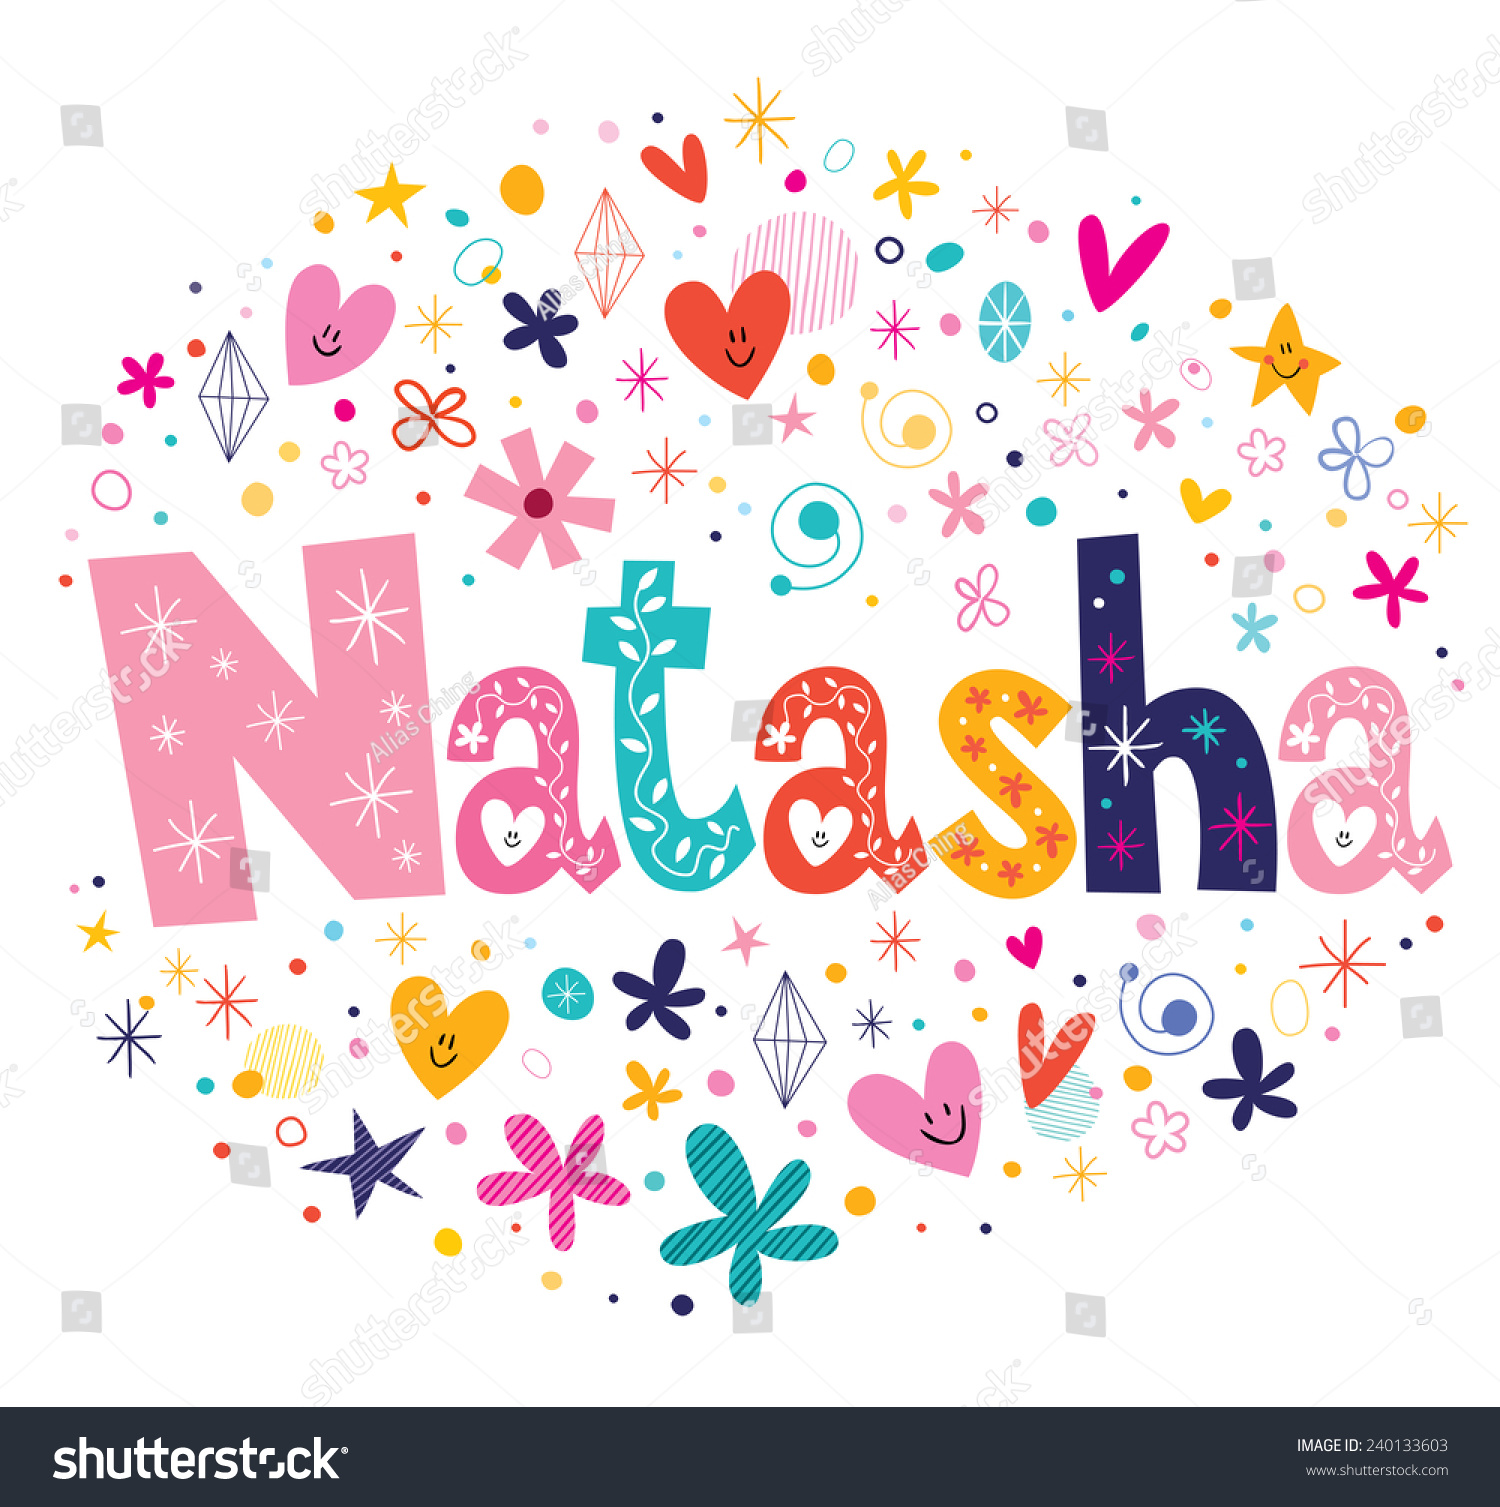 Natasha Name Design Stock Vector Illustration 240133603 : Shutterstock